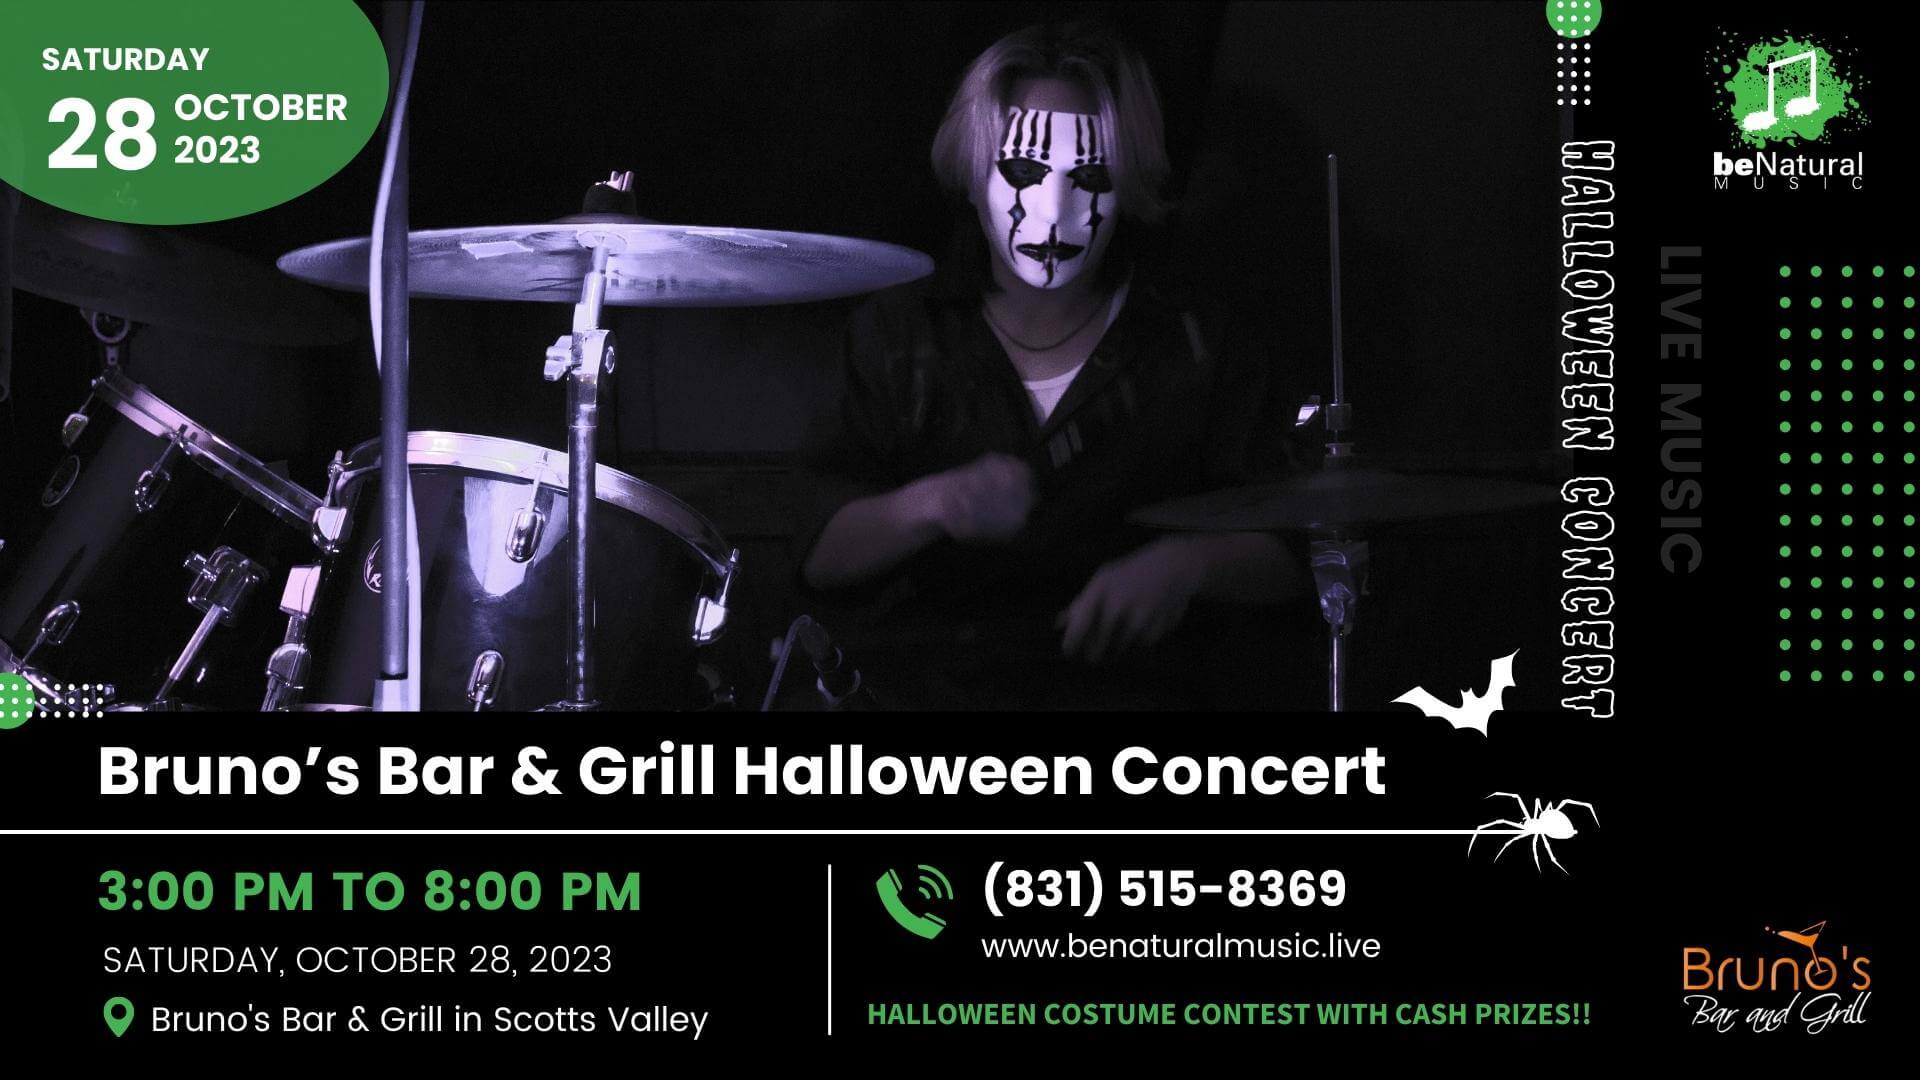 Bruno’s Bar & Grill Halloween Concert in Scotts Valley